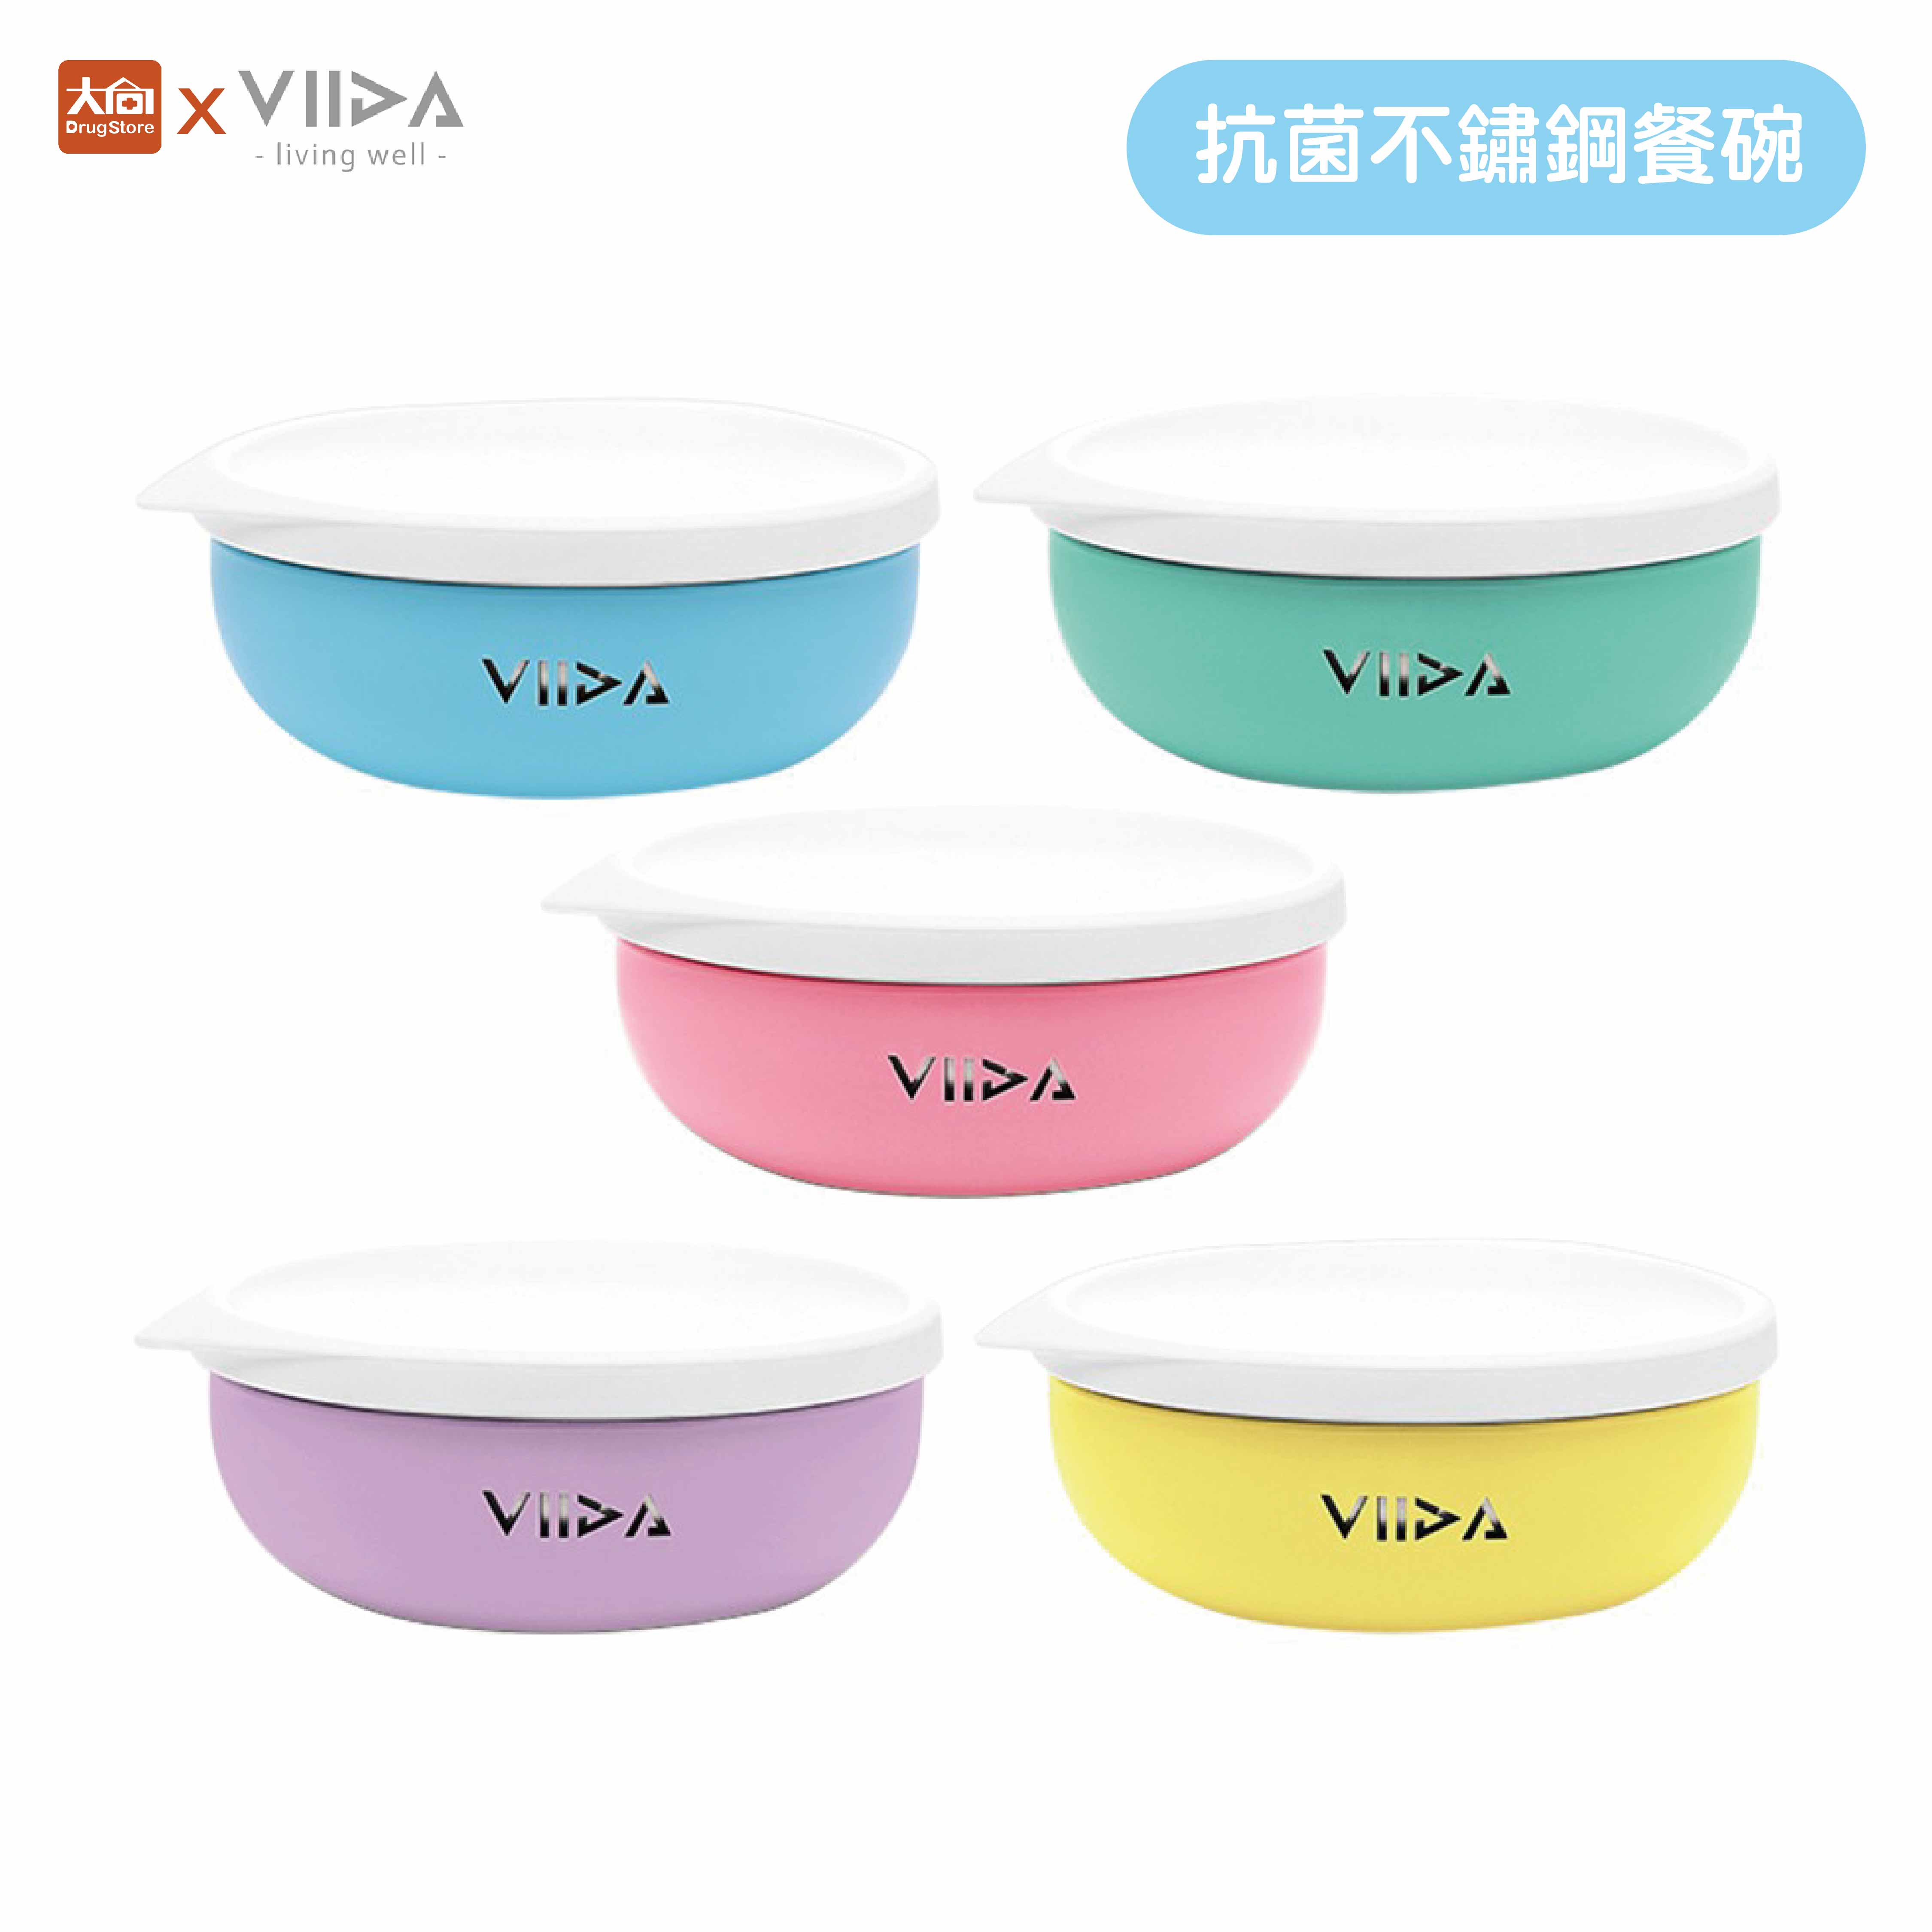 VIIDA SOUFFLÉ 抗菌不鏽鋼餐碗 多種顏色